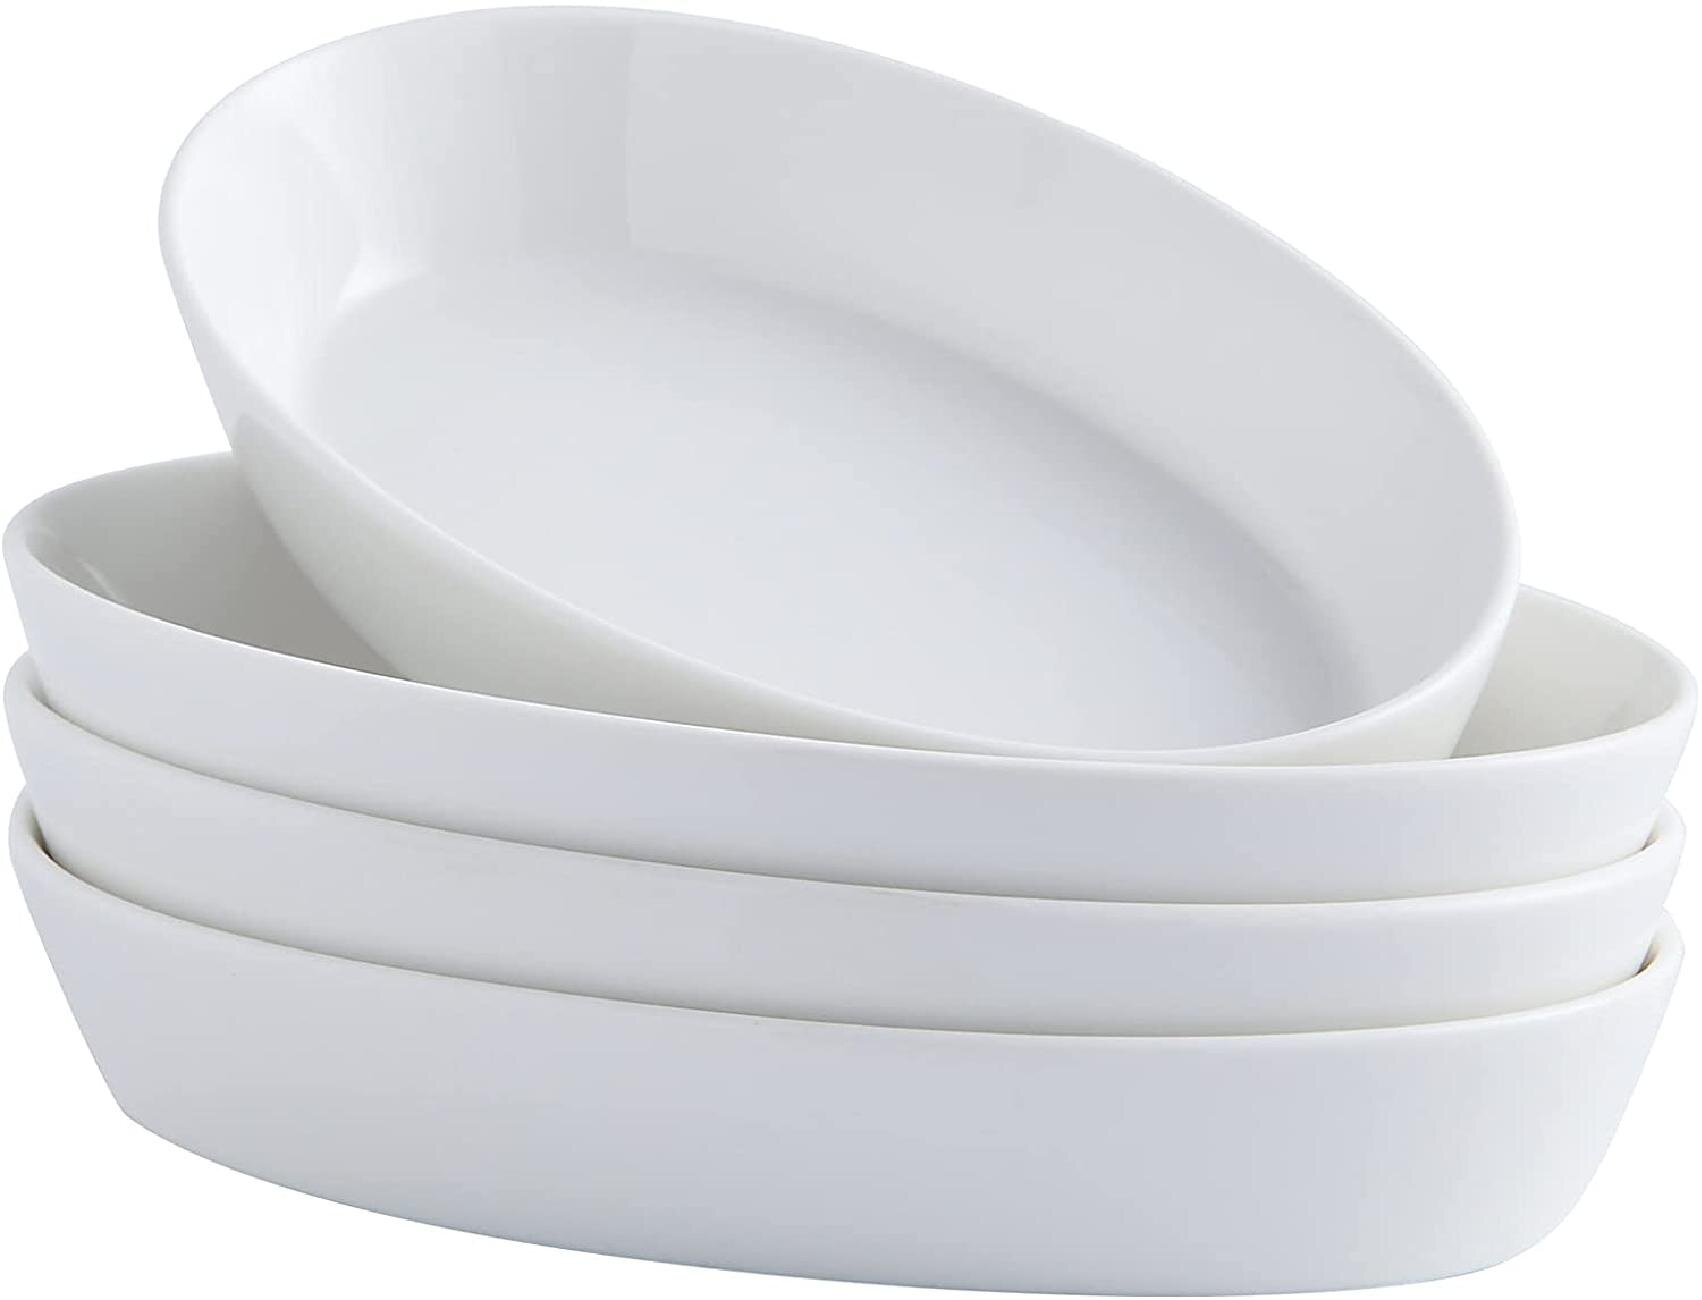 Oval Au Gratin Baking Dishes Ceramic Bakeware Set 11.5oz Baking Dish Set Oval Baking Pan Ideal for vegetables Creme Brulee Set of 4 White potatoes 